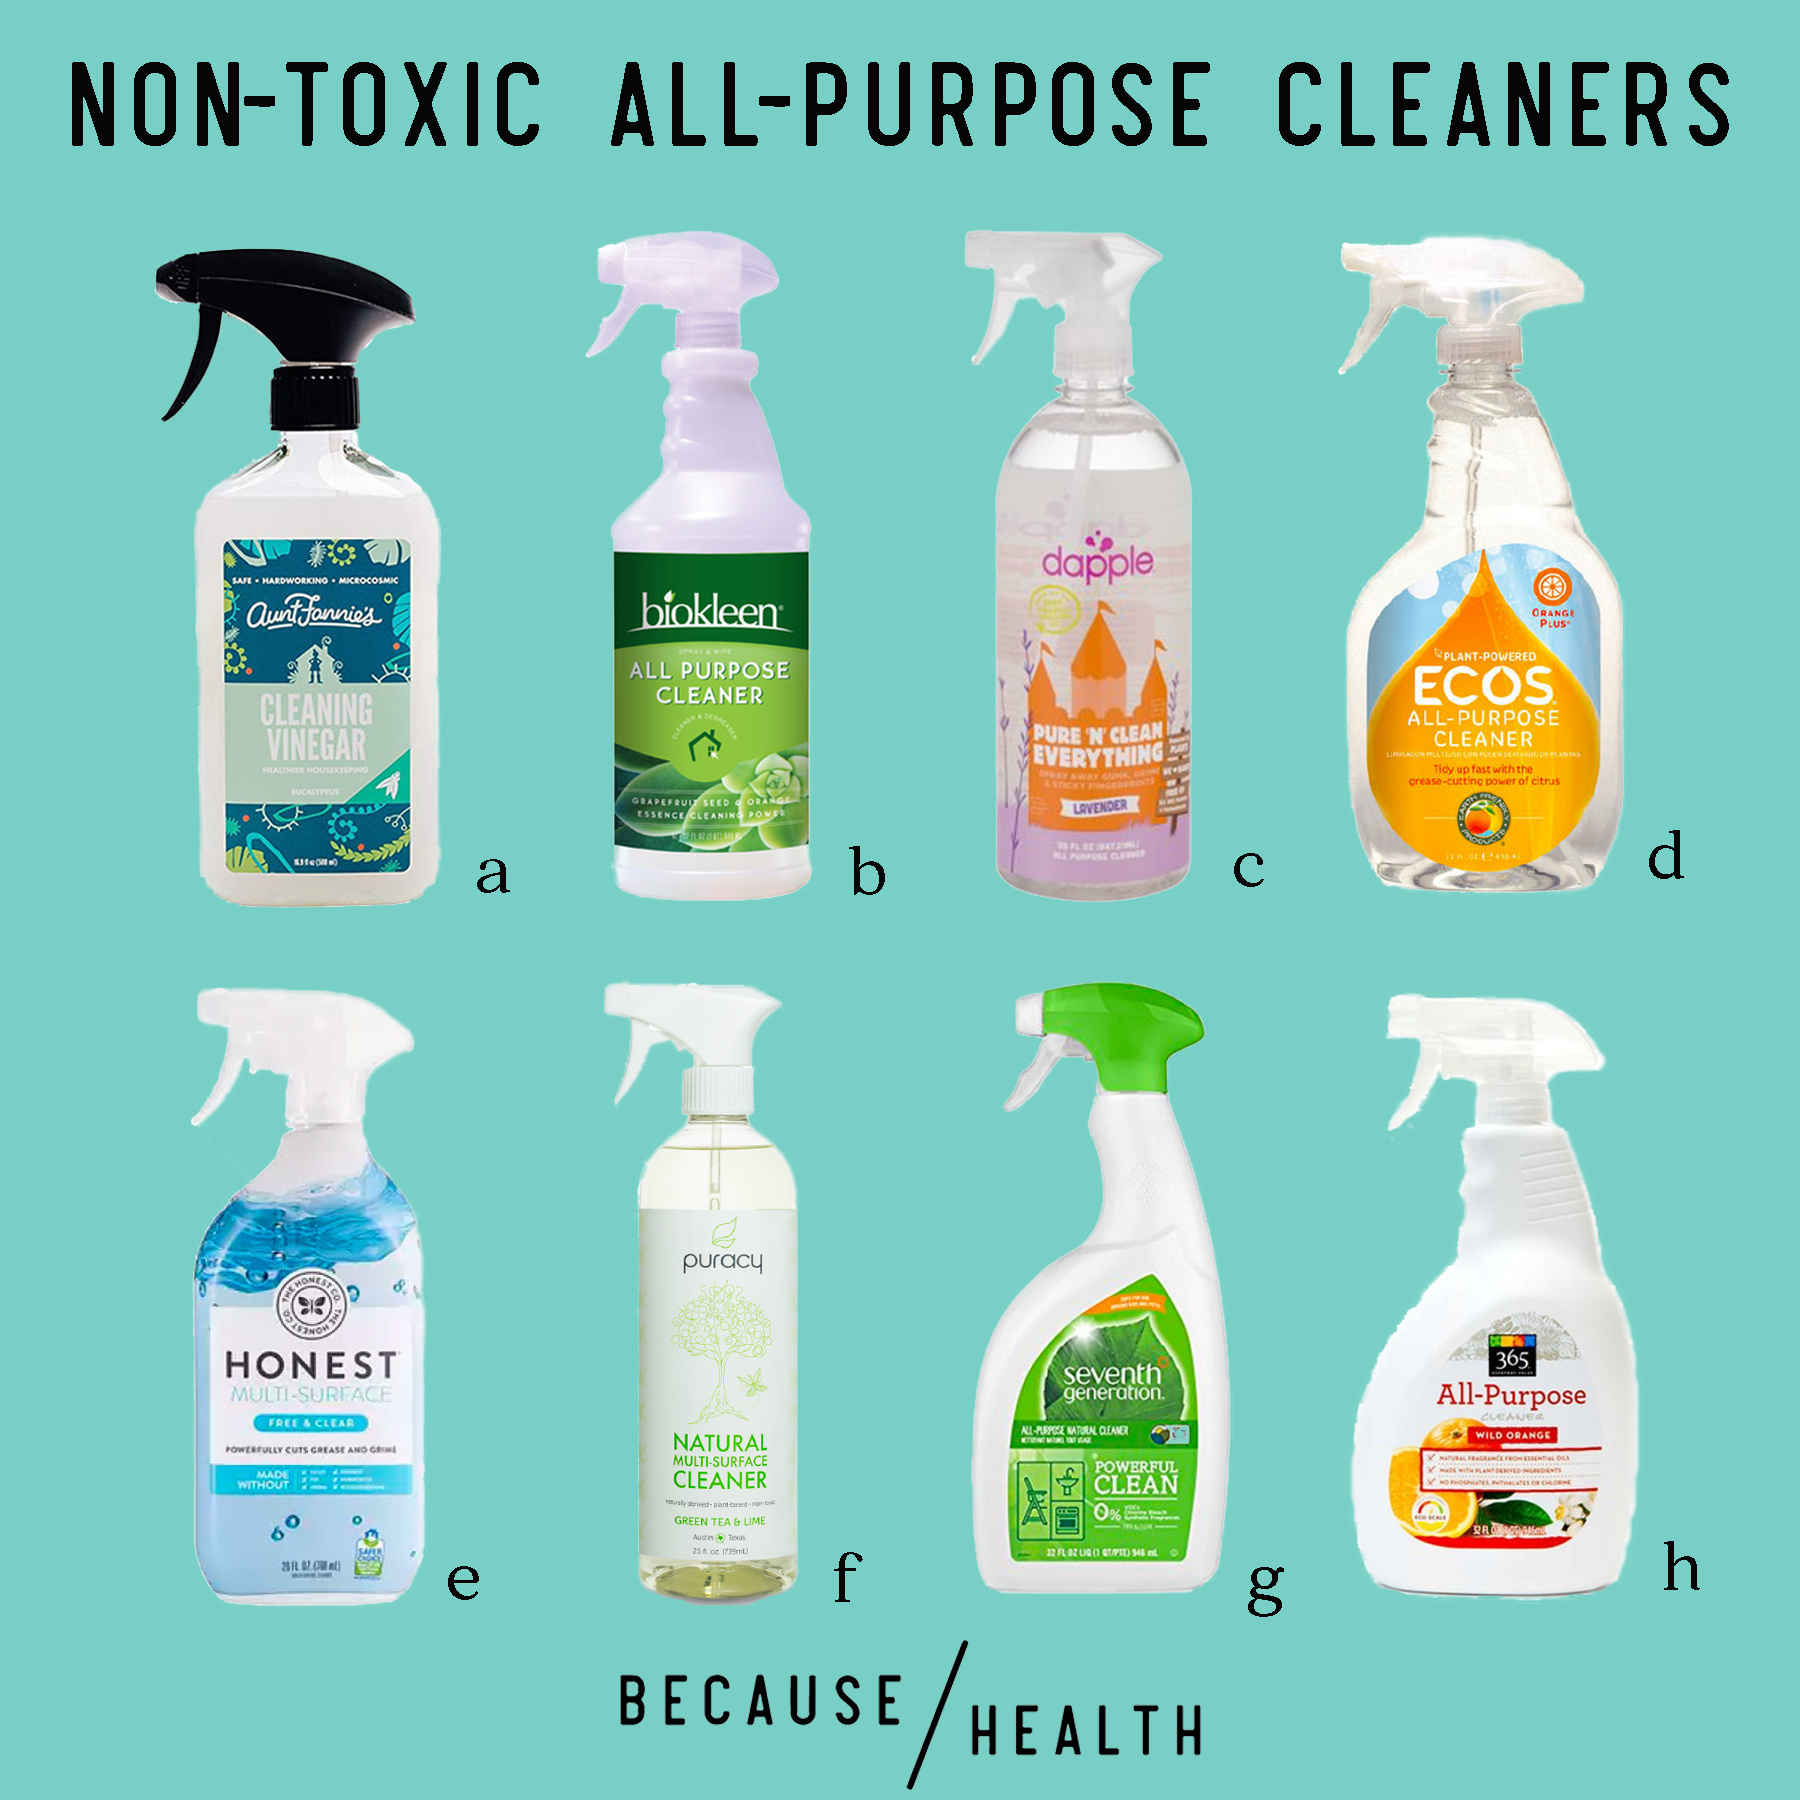 8 NonToxic AllPurpose Cleaners Center for Environmental Health